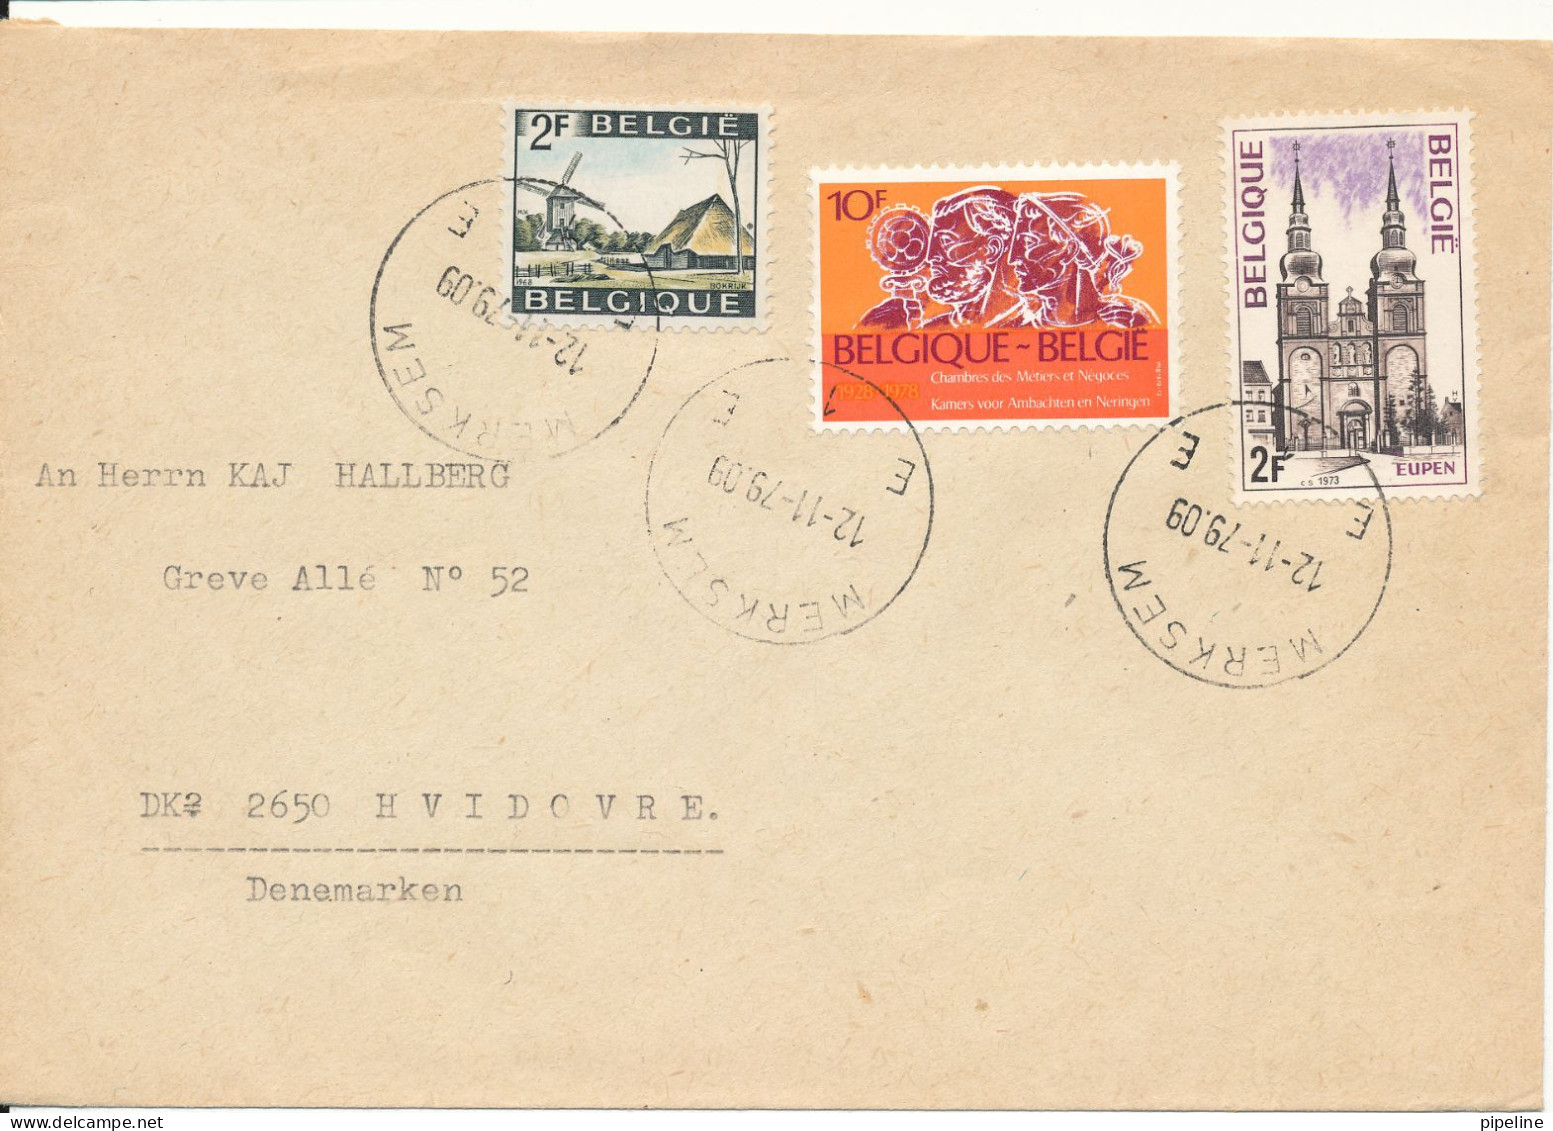 Belgium Cover Sent To Denmark Merksem 12-11-1979 Topic Stamps - Briefe U. Dokumente